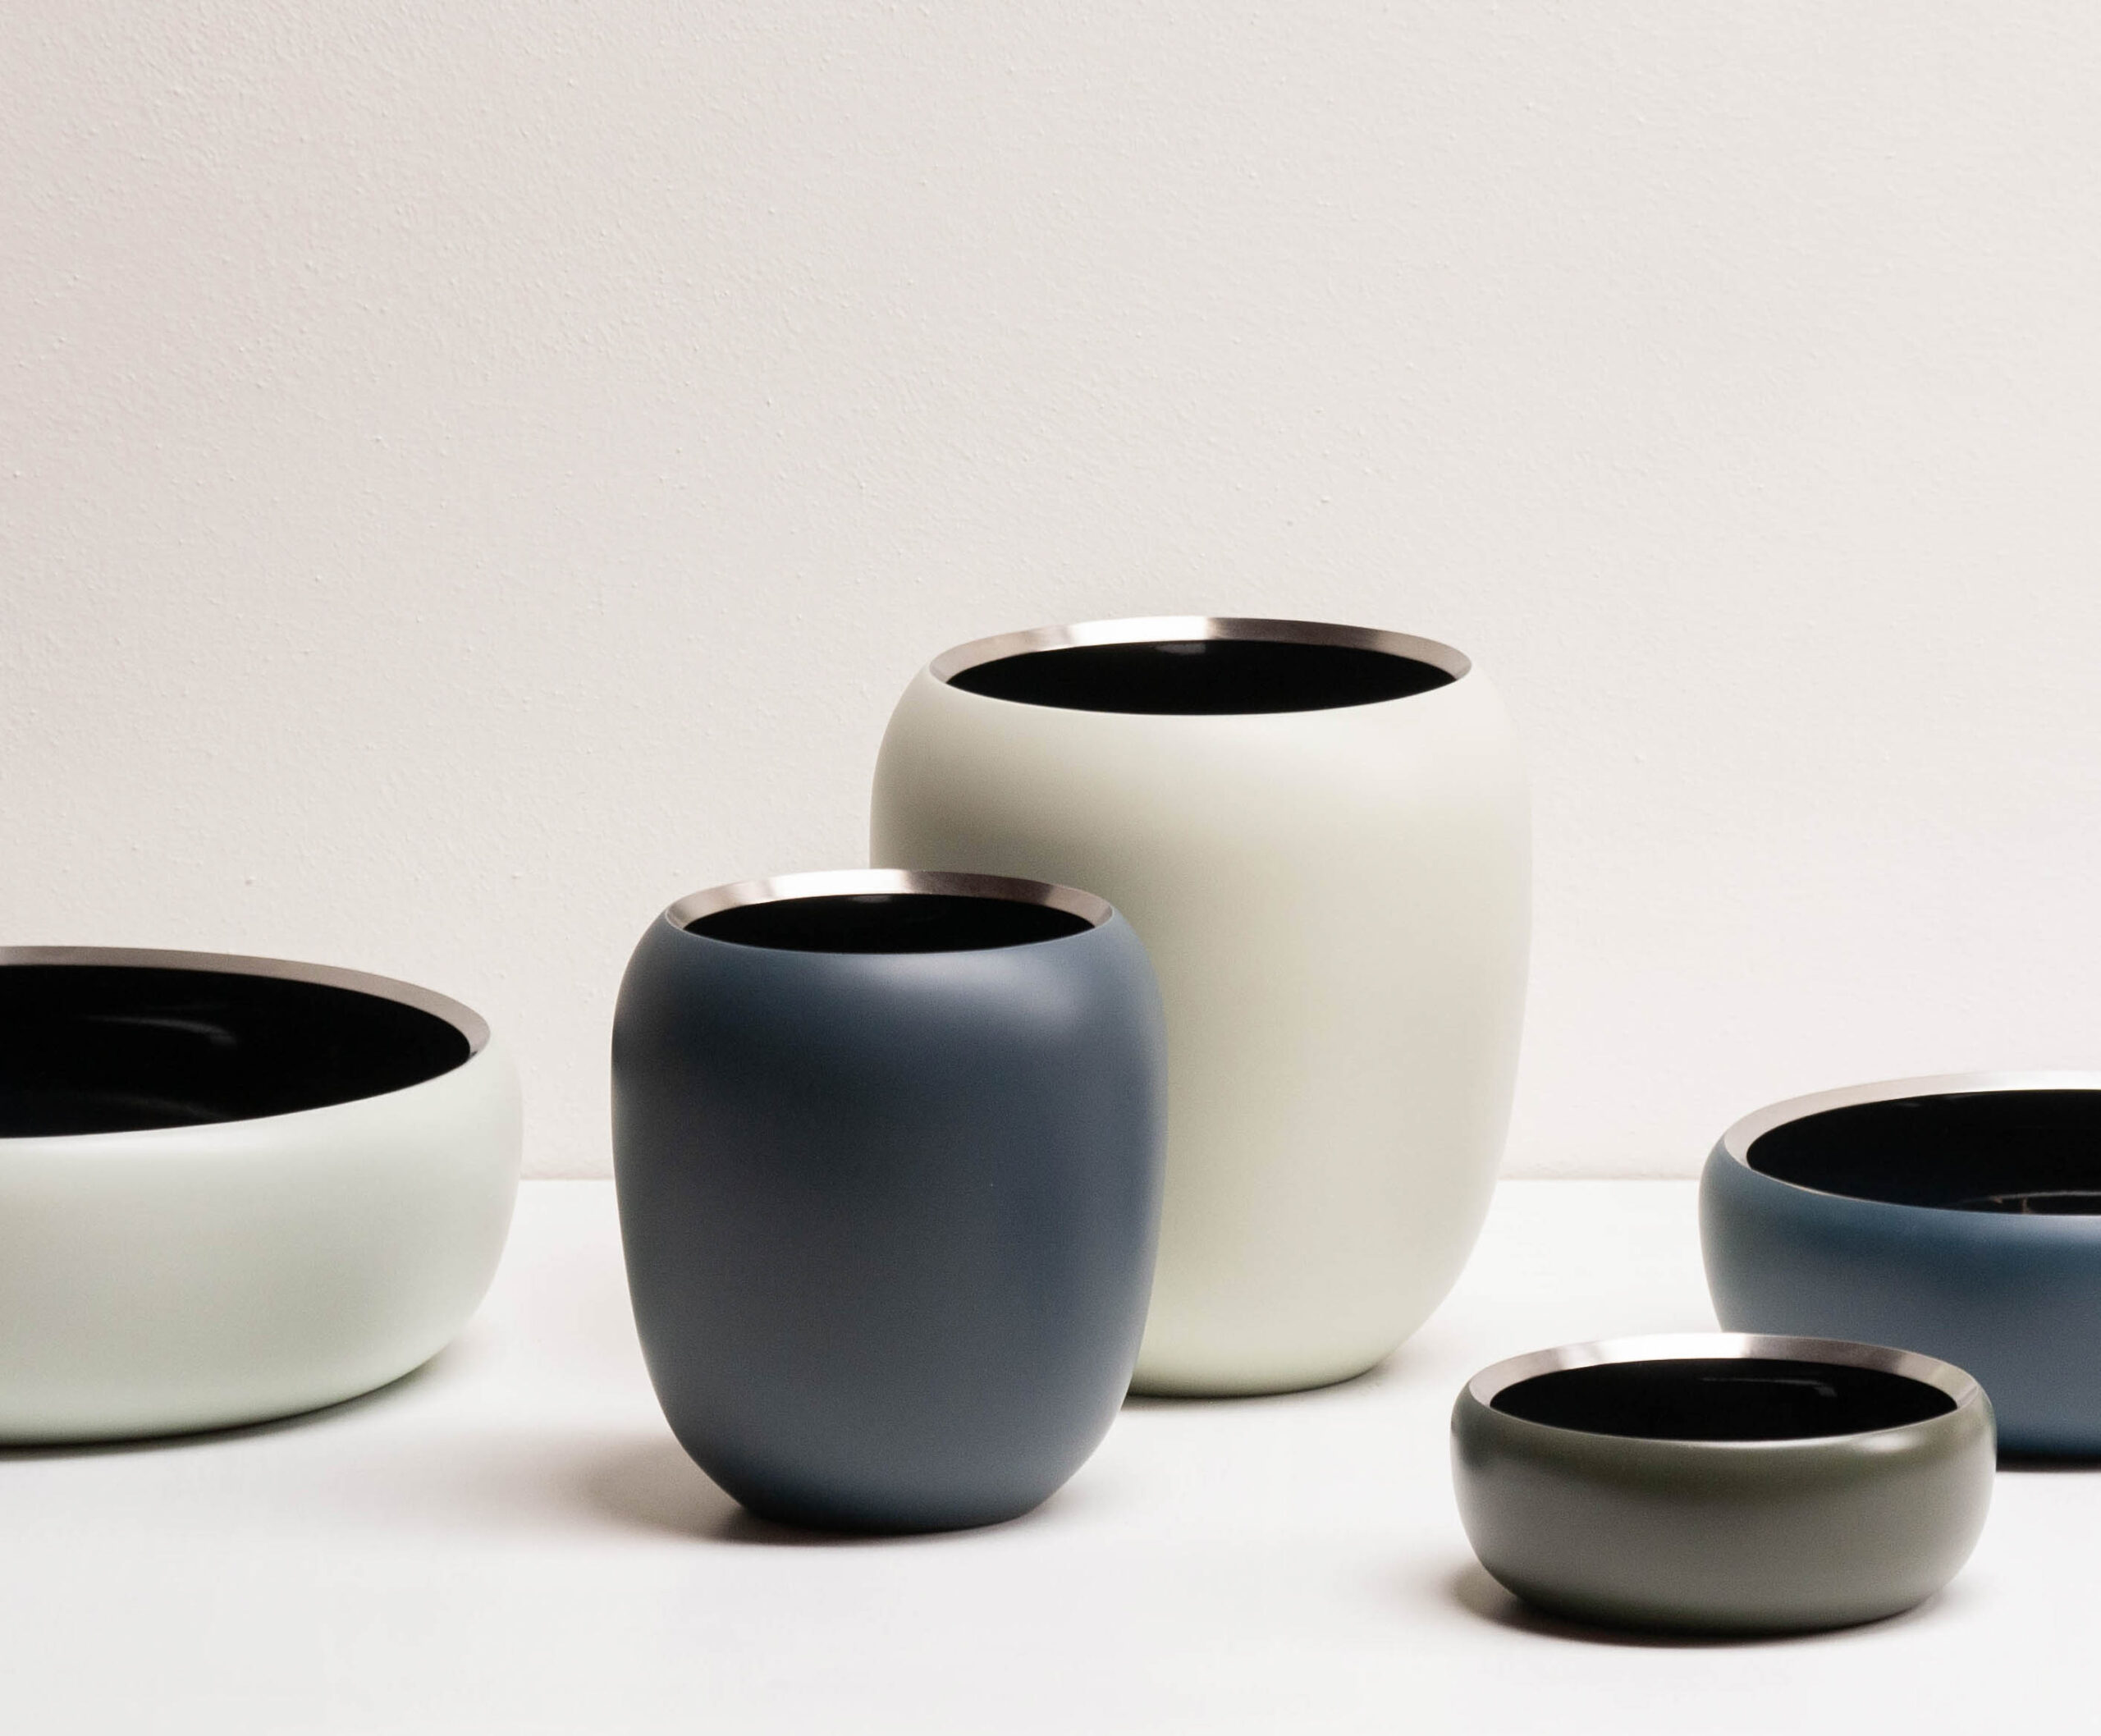 Blue and Mint Ora Vases designed by Debiasi Sandri for Stelton